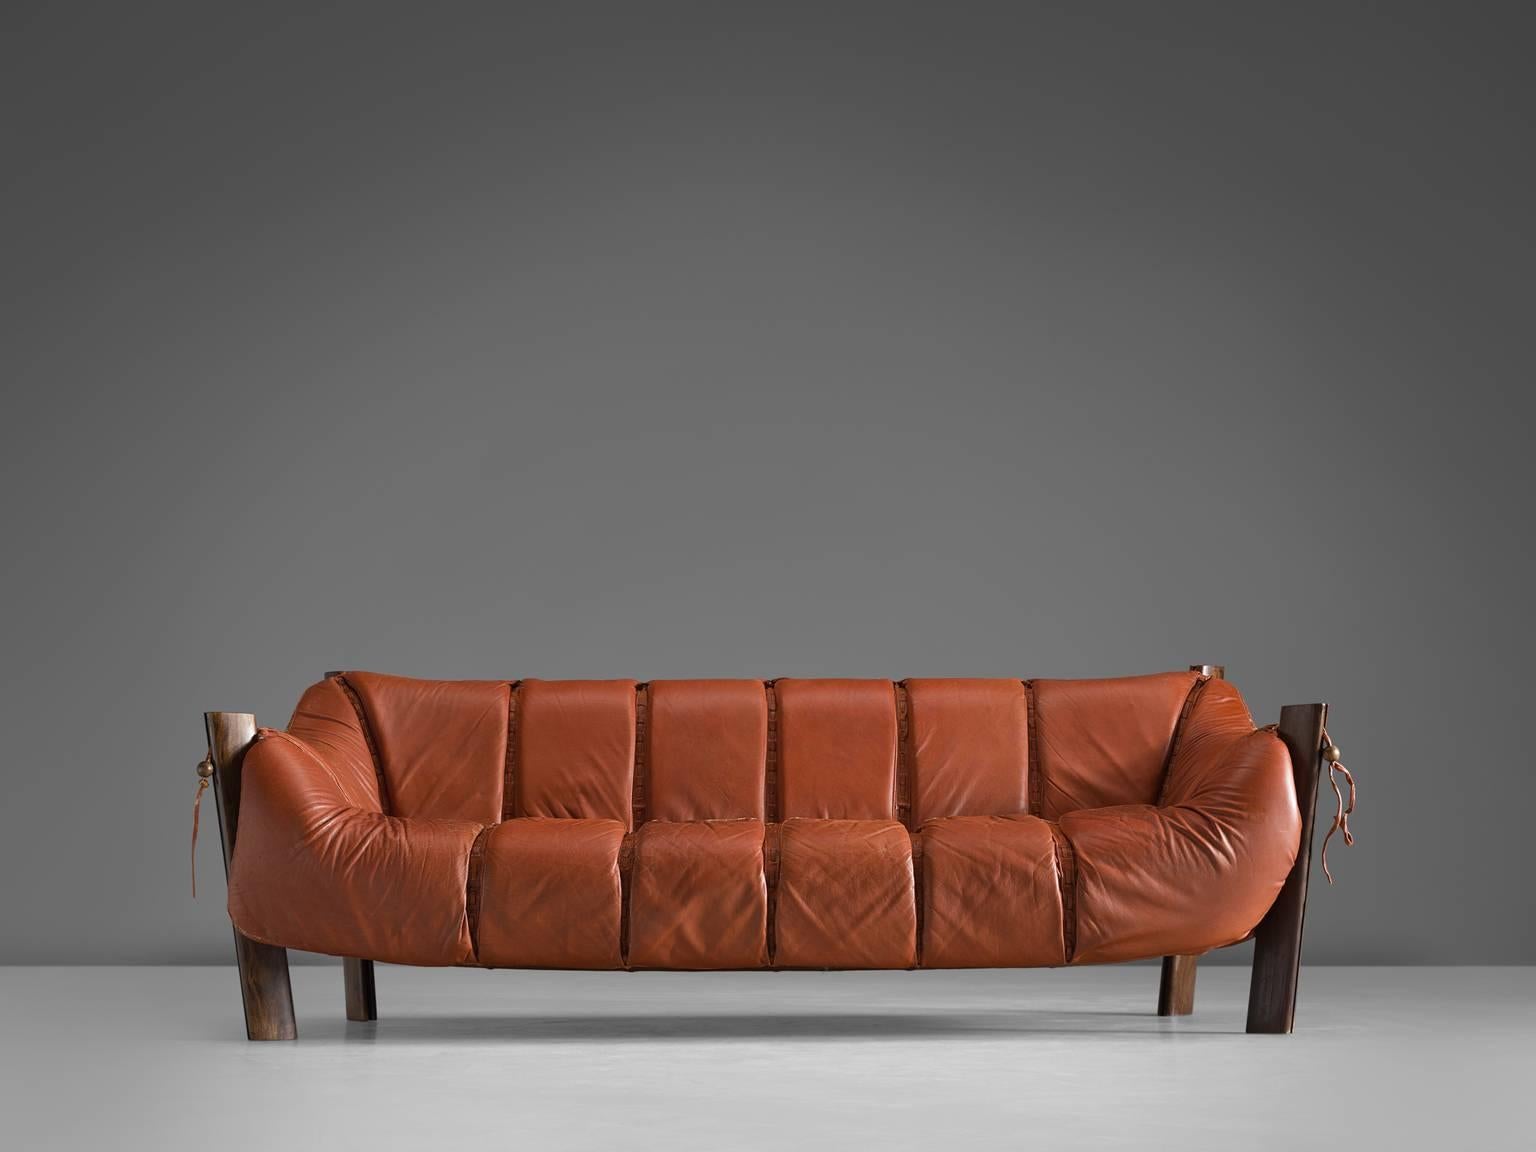 Brazilian Percival Lafer Three-Seat Sofa in Red Leather